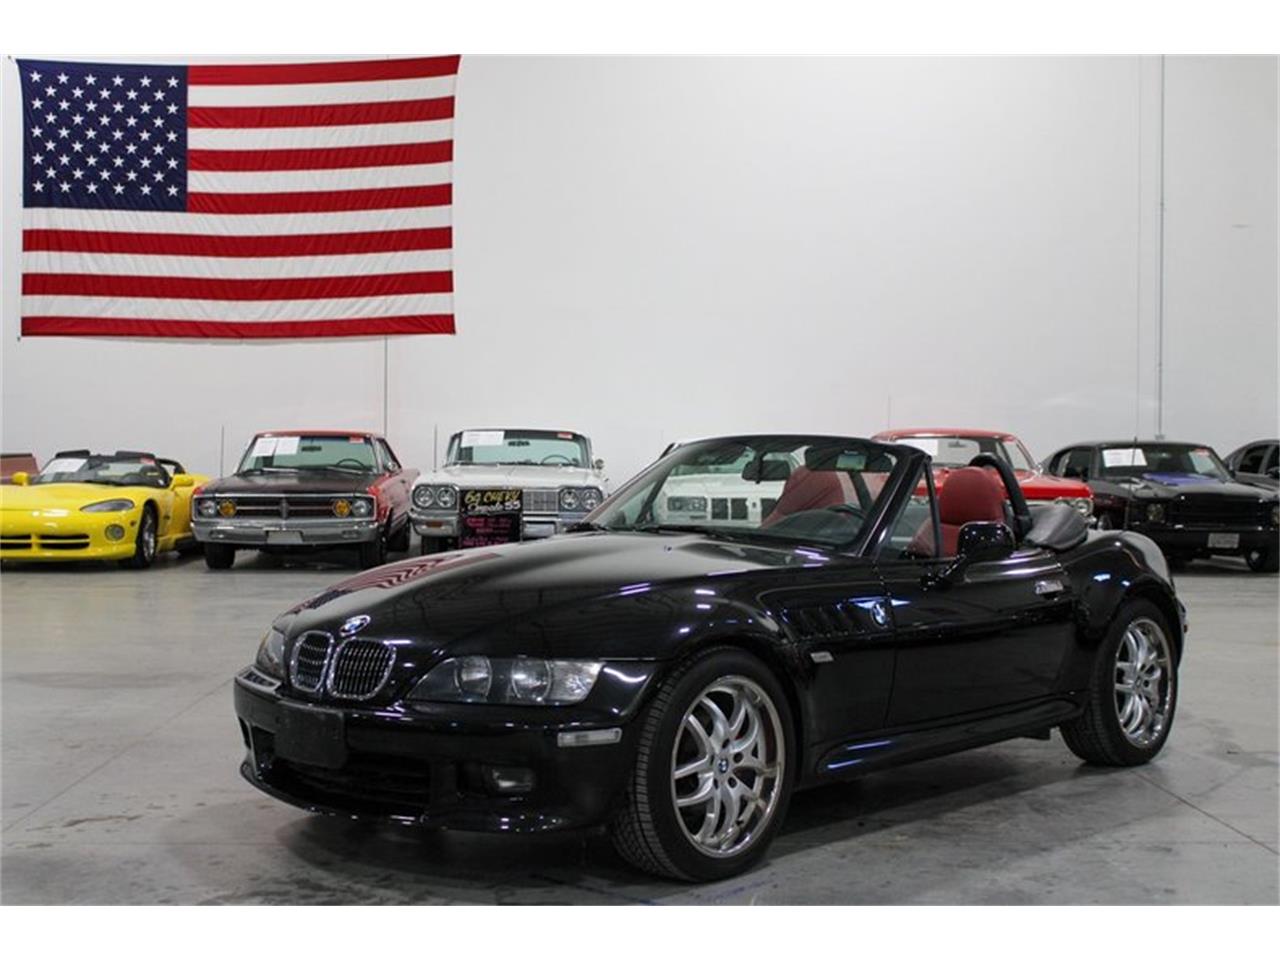 For Sale: 2002 BMW Z3 in Ken2od, Michigan for sale in Grand Rapids, MI